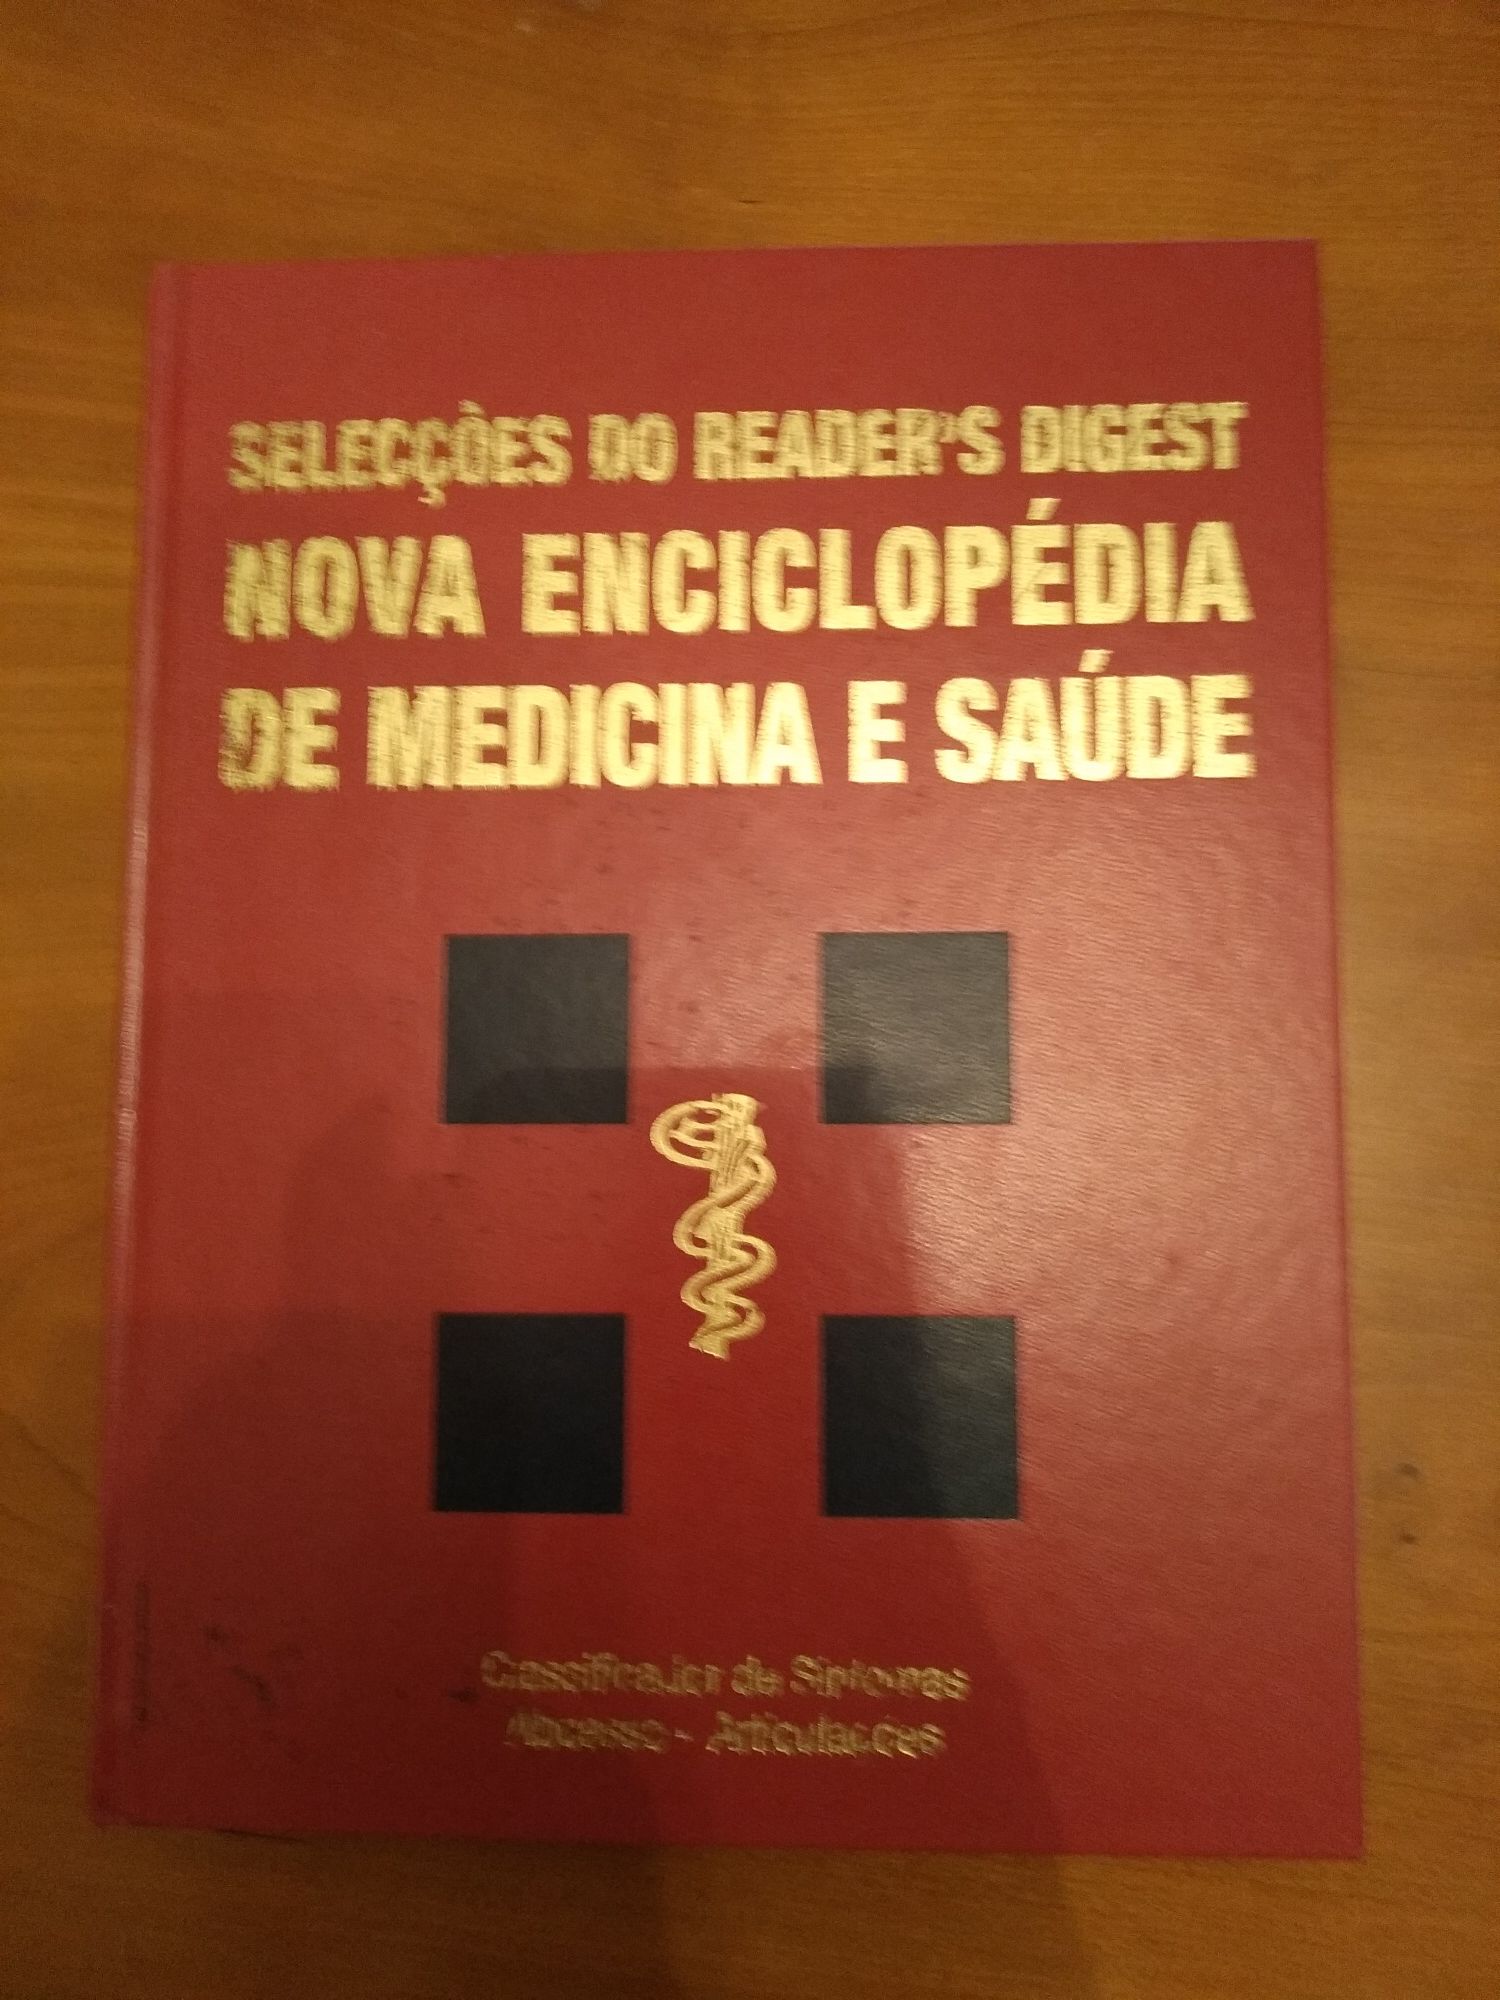 Readers Digest "Nova enciclopédia medicina e saúde"